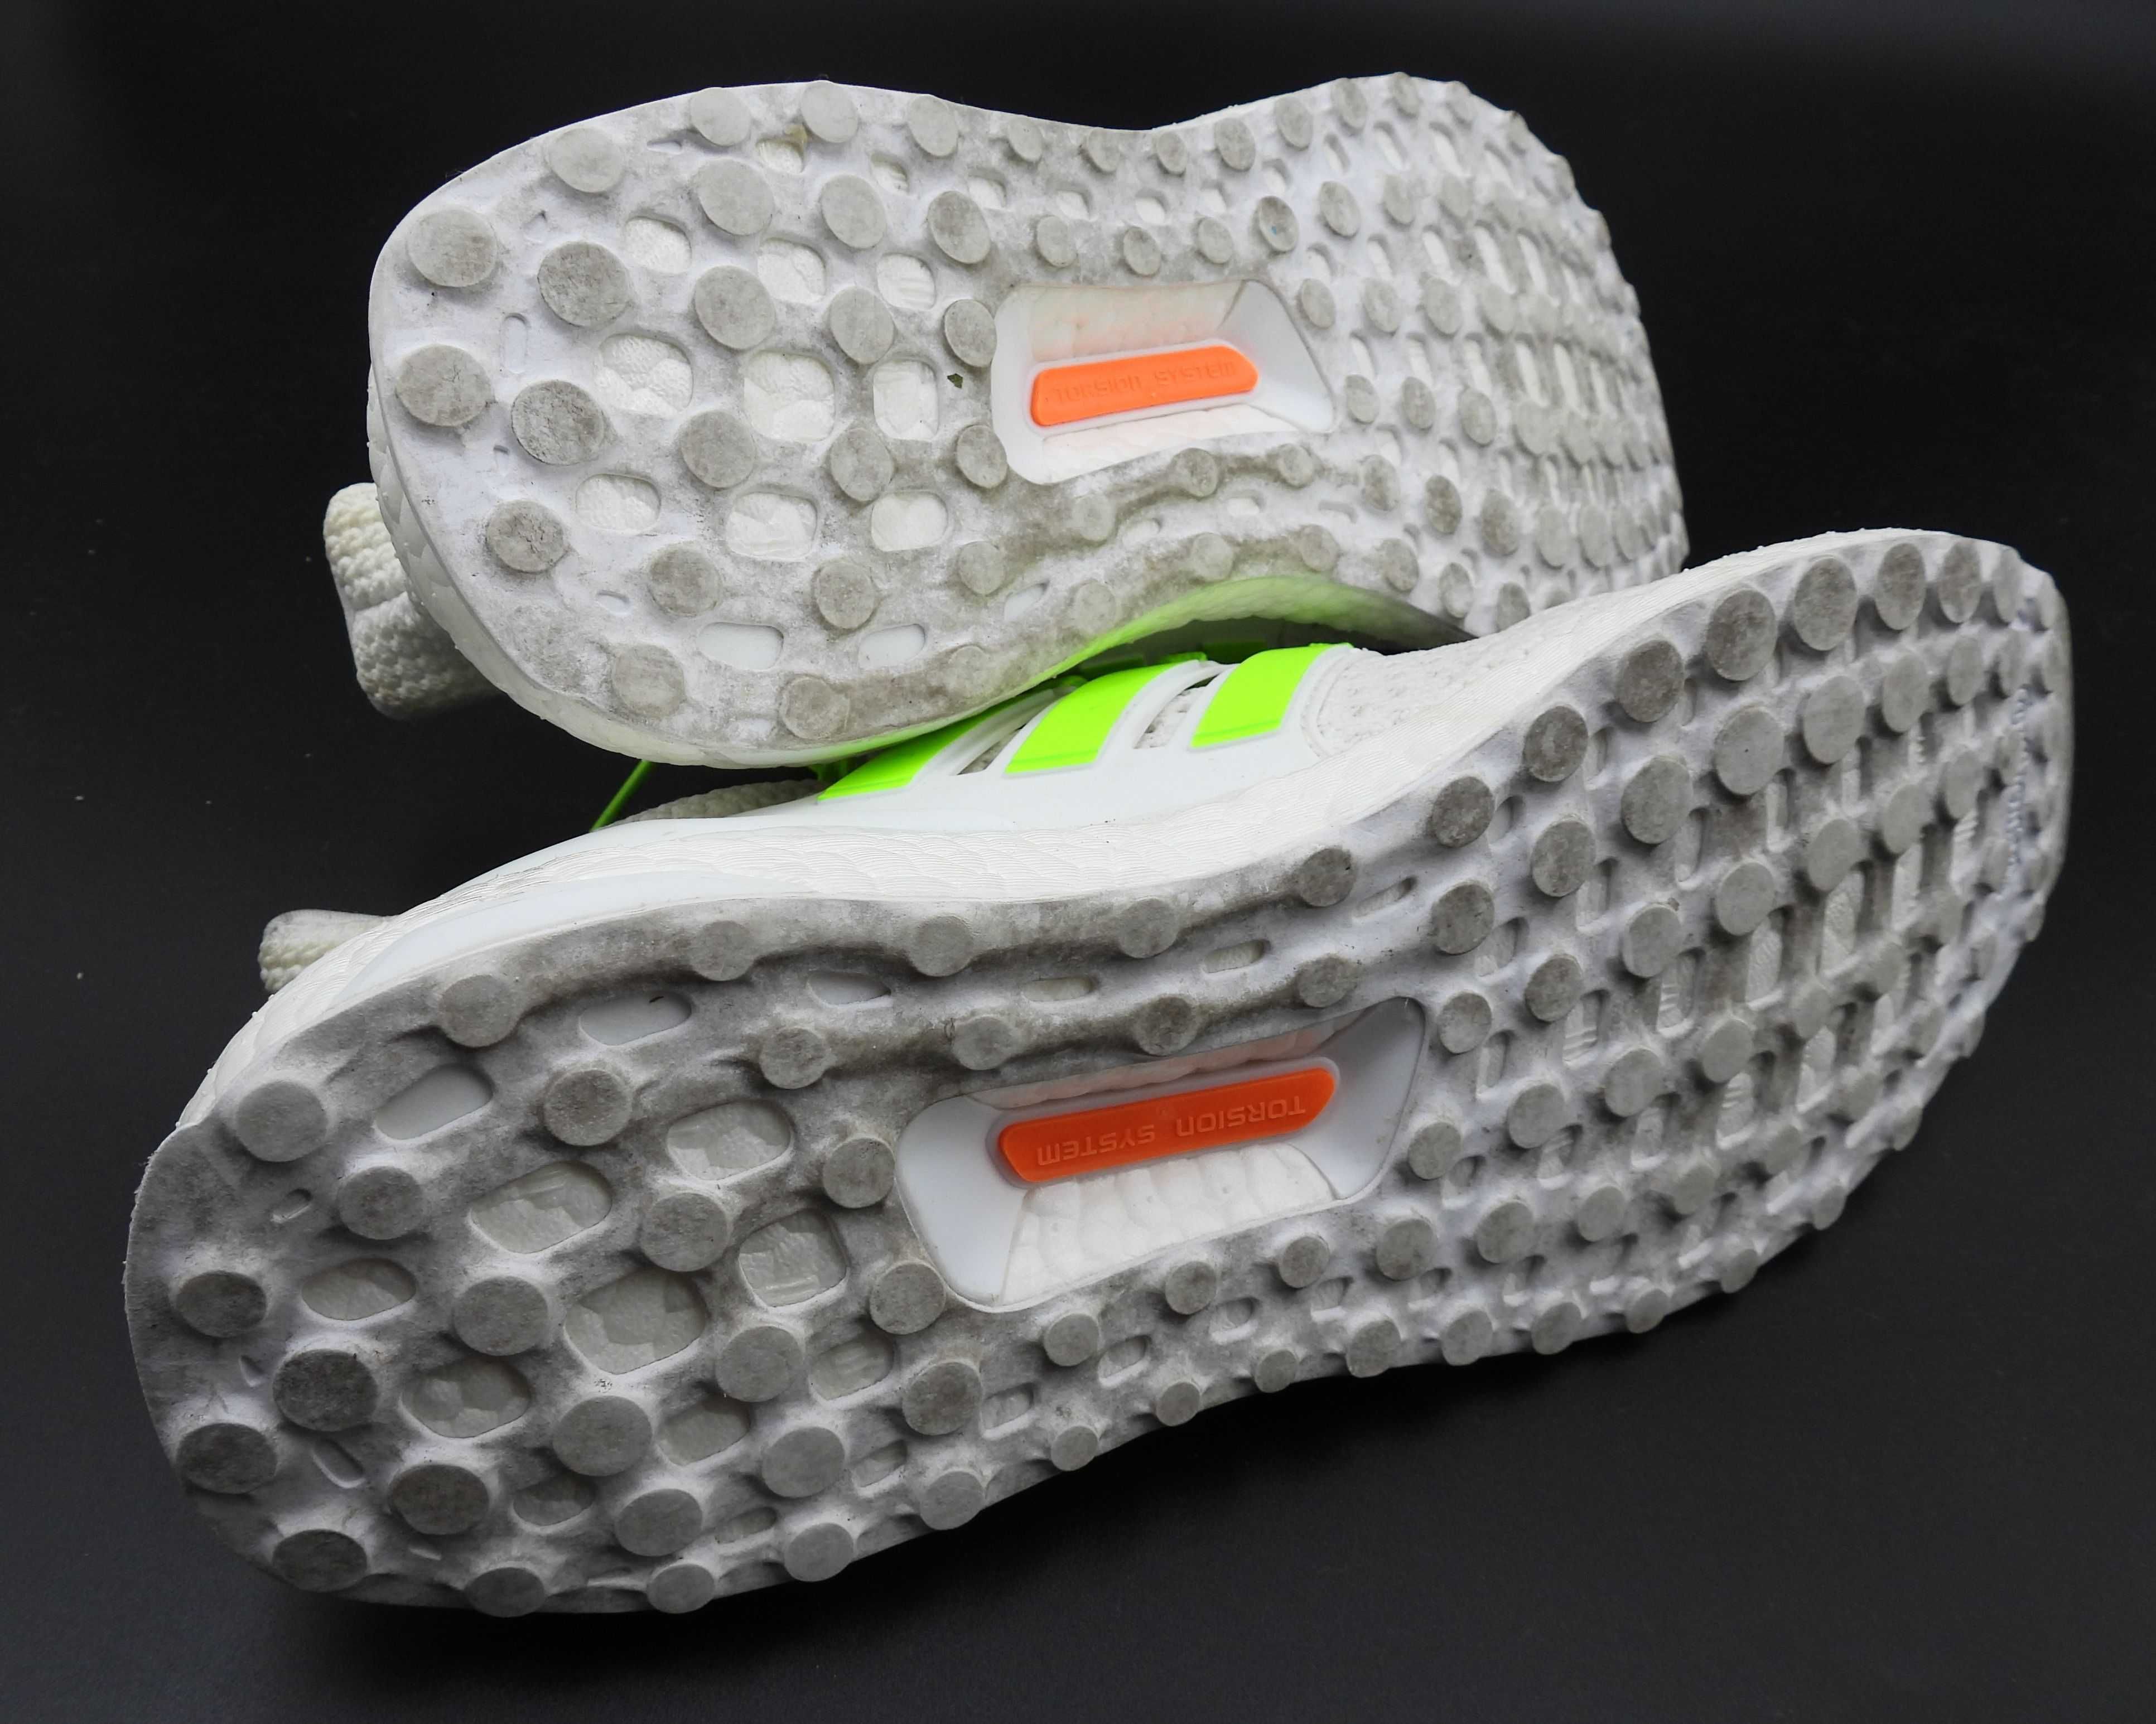 Adidas Ultra Boost leciutkie buty do biegania r. 40,66